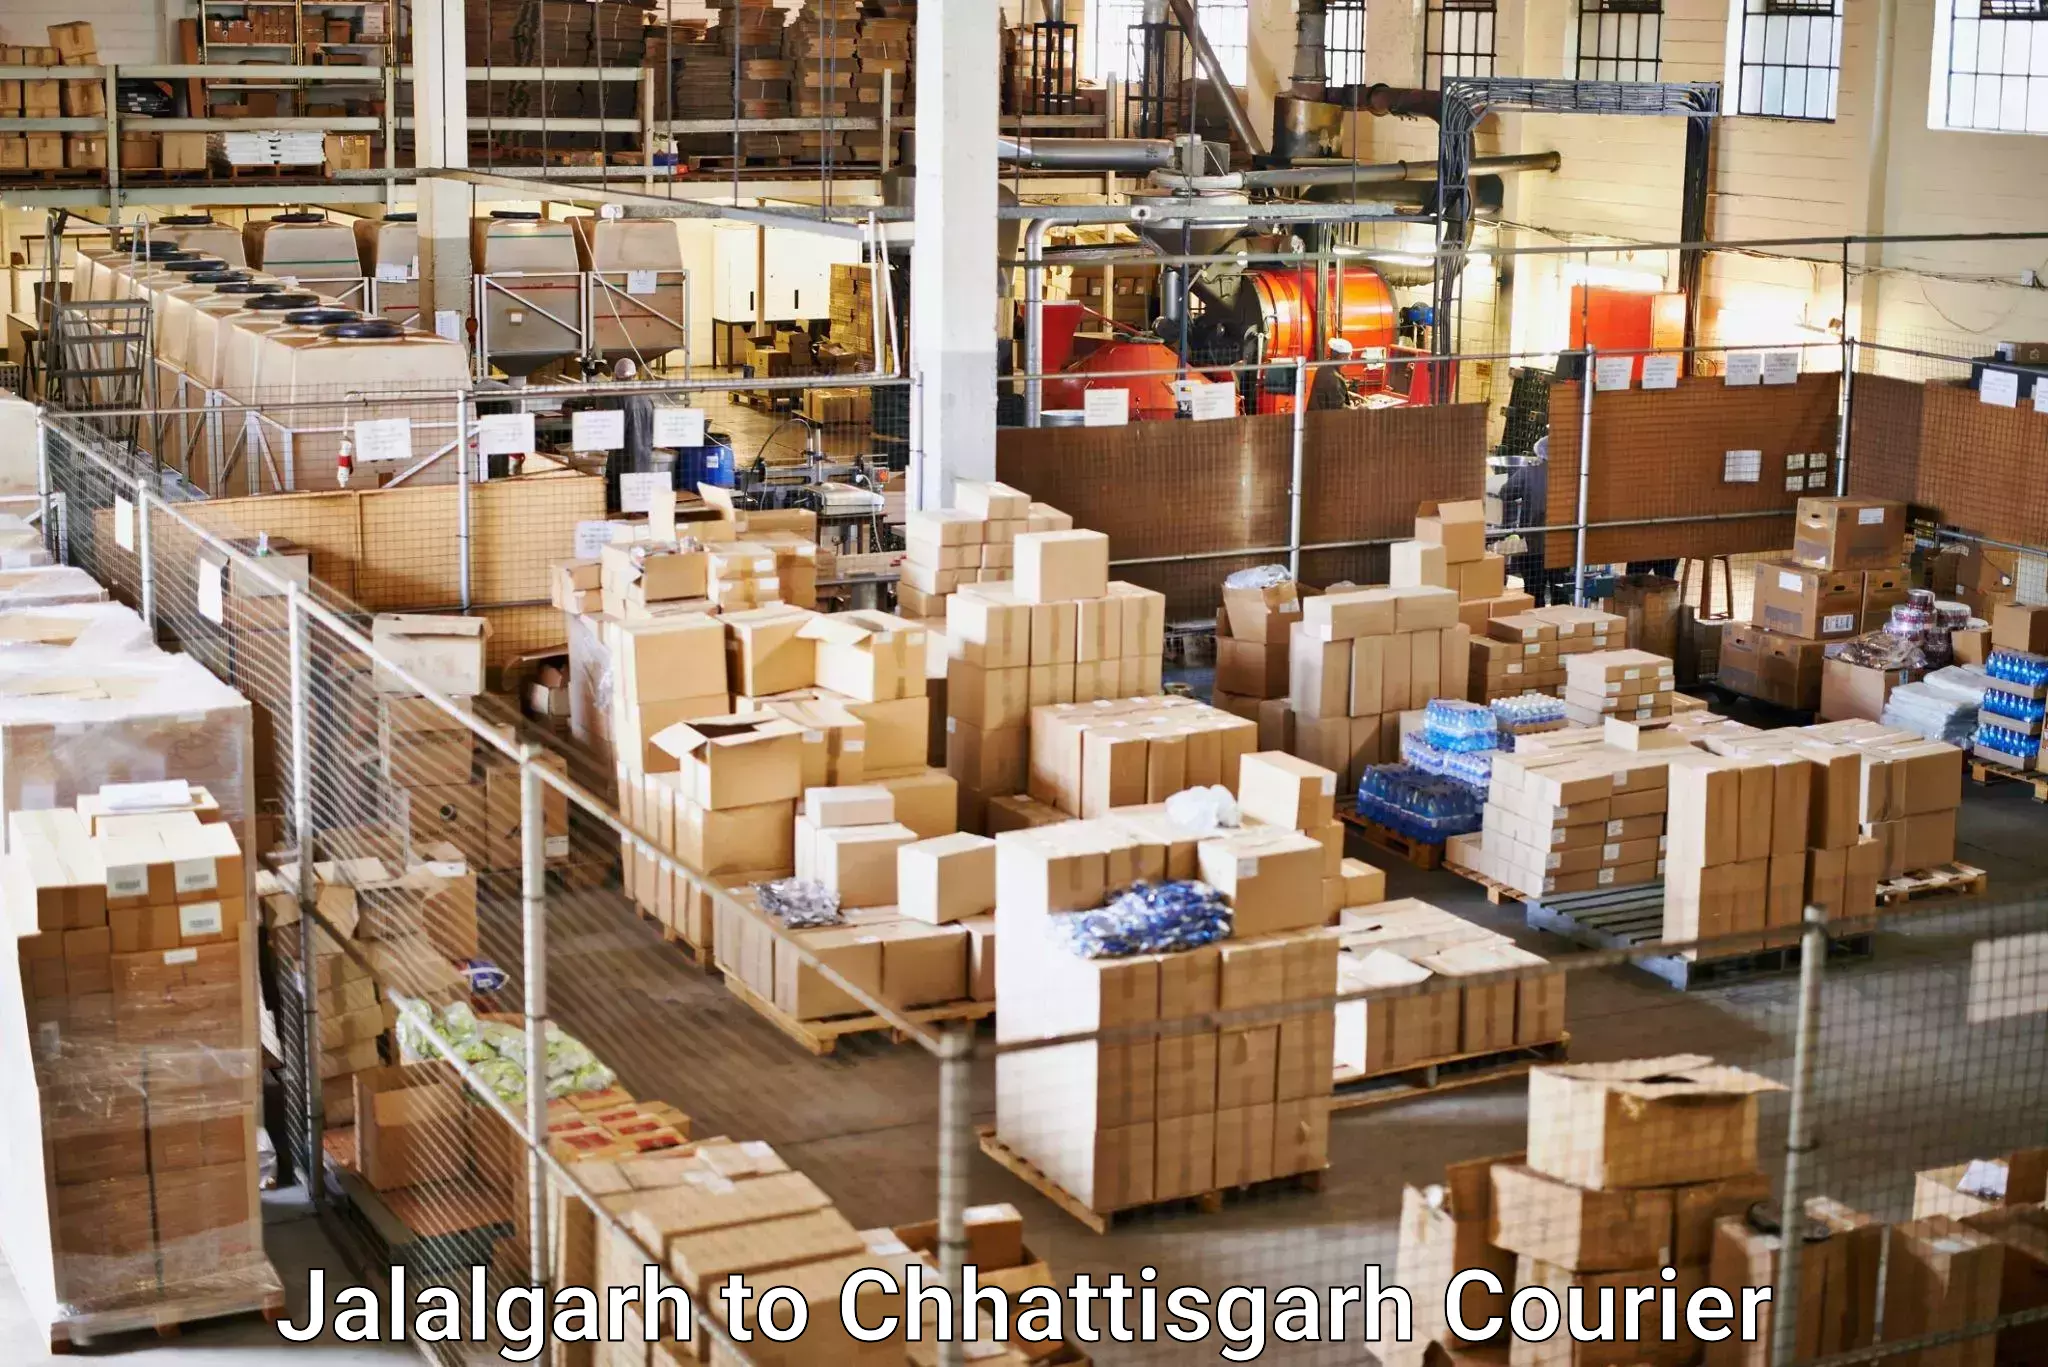 International parcel service Jalalgarh to Chhattisgarh